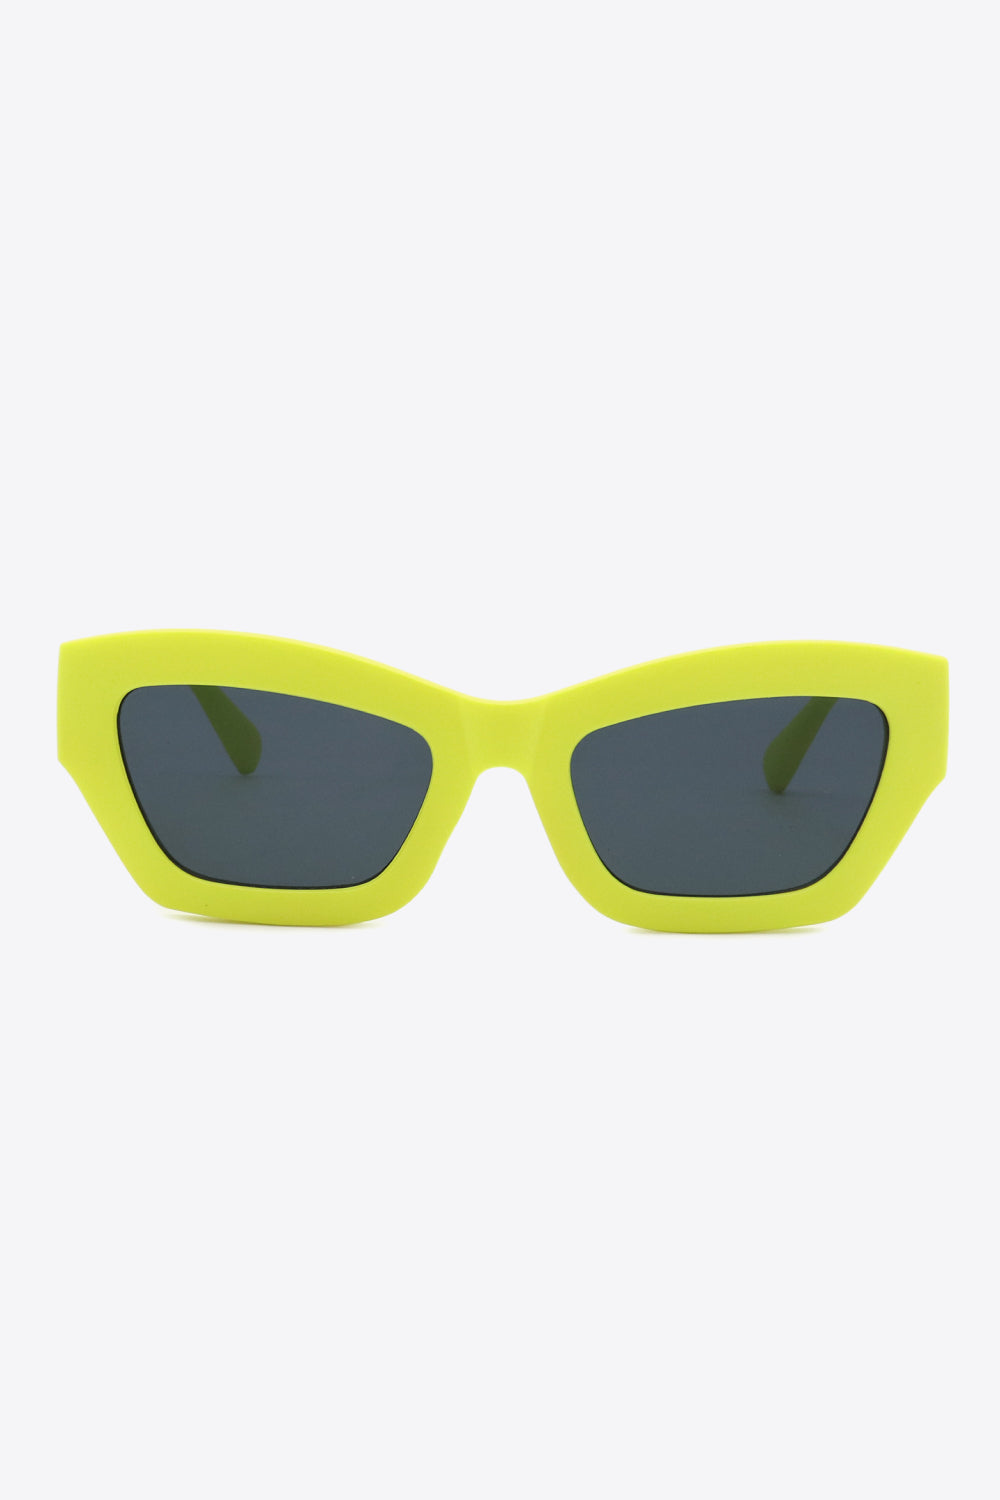 Classic UV400 Polycarbonate Frame Sunglasses - Sunglasses - FITGGINS